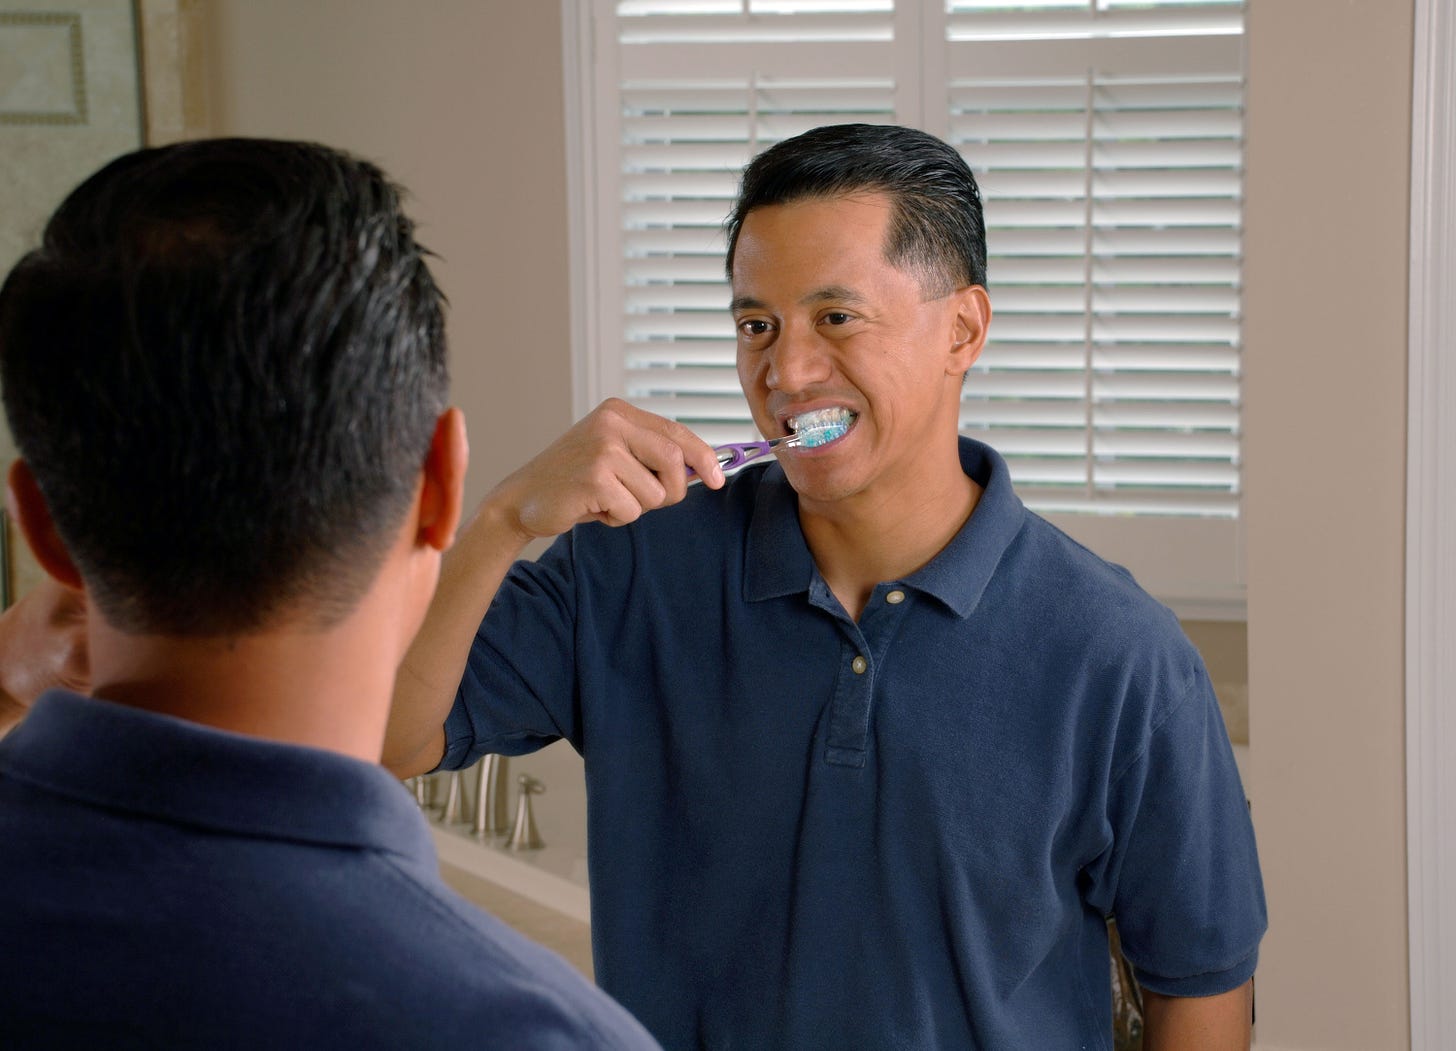 Tooth brushing - Wikipedia